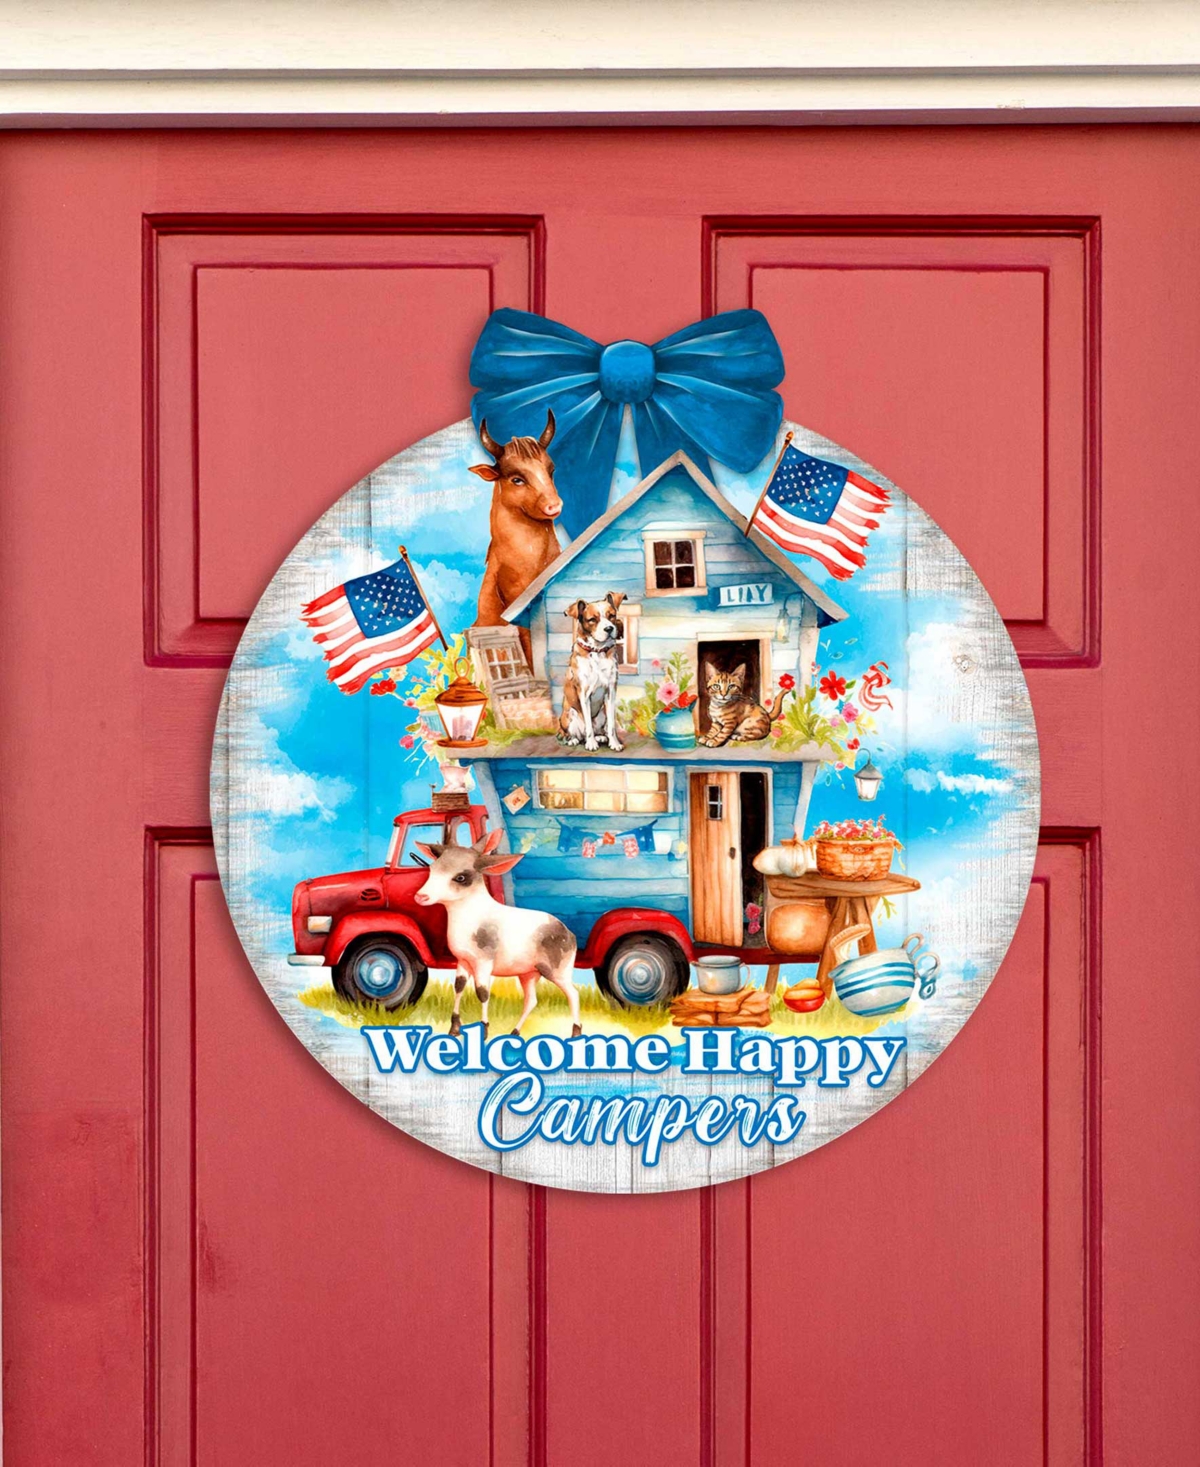 Designocracy Holiday Wooden Door Hanger Welcome Sign Welcome Happy Campers Sign G. Debrekht In Multi Color